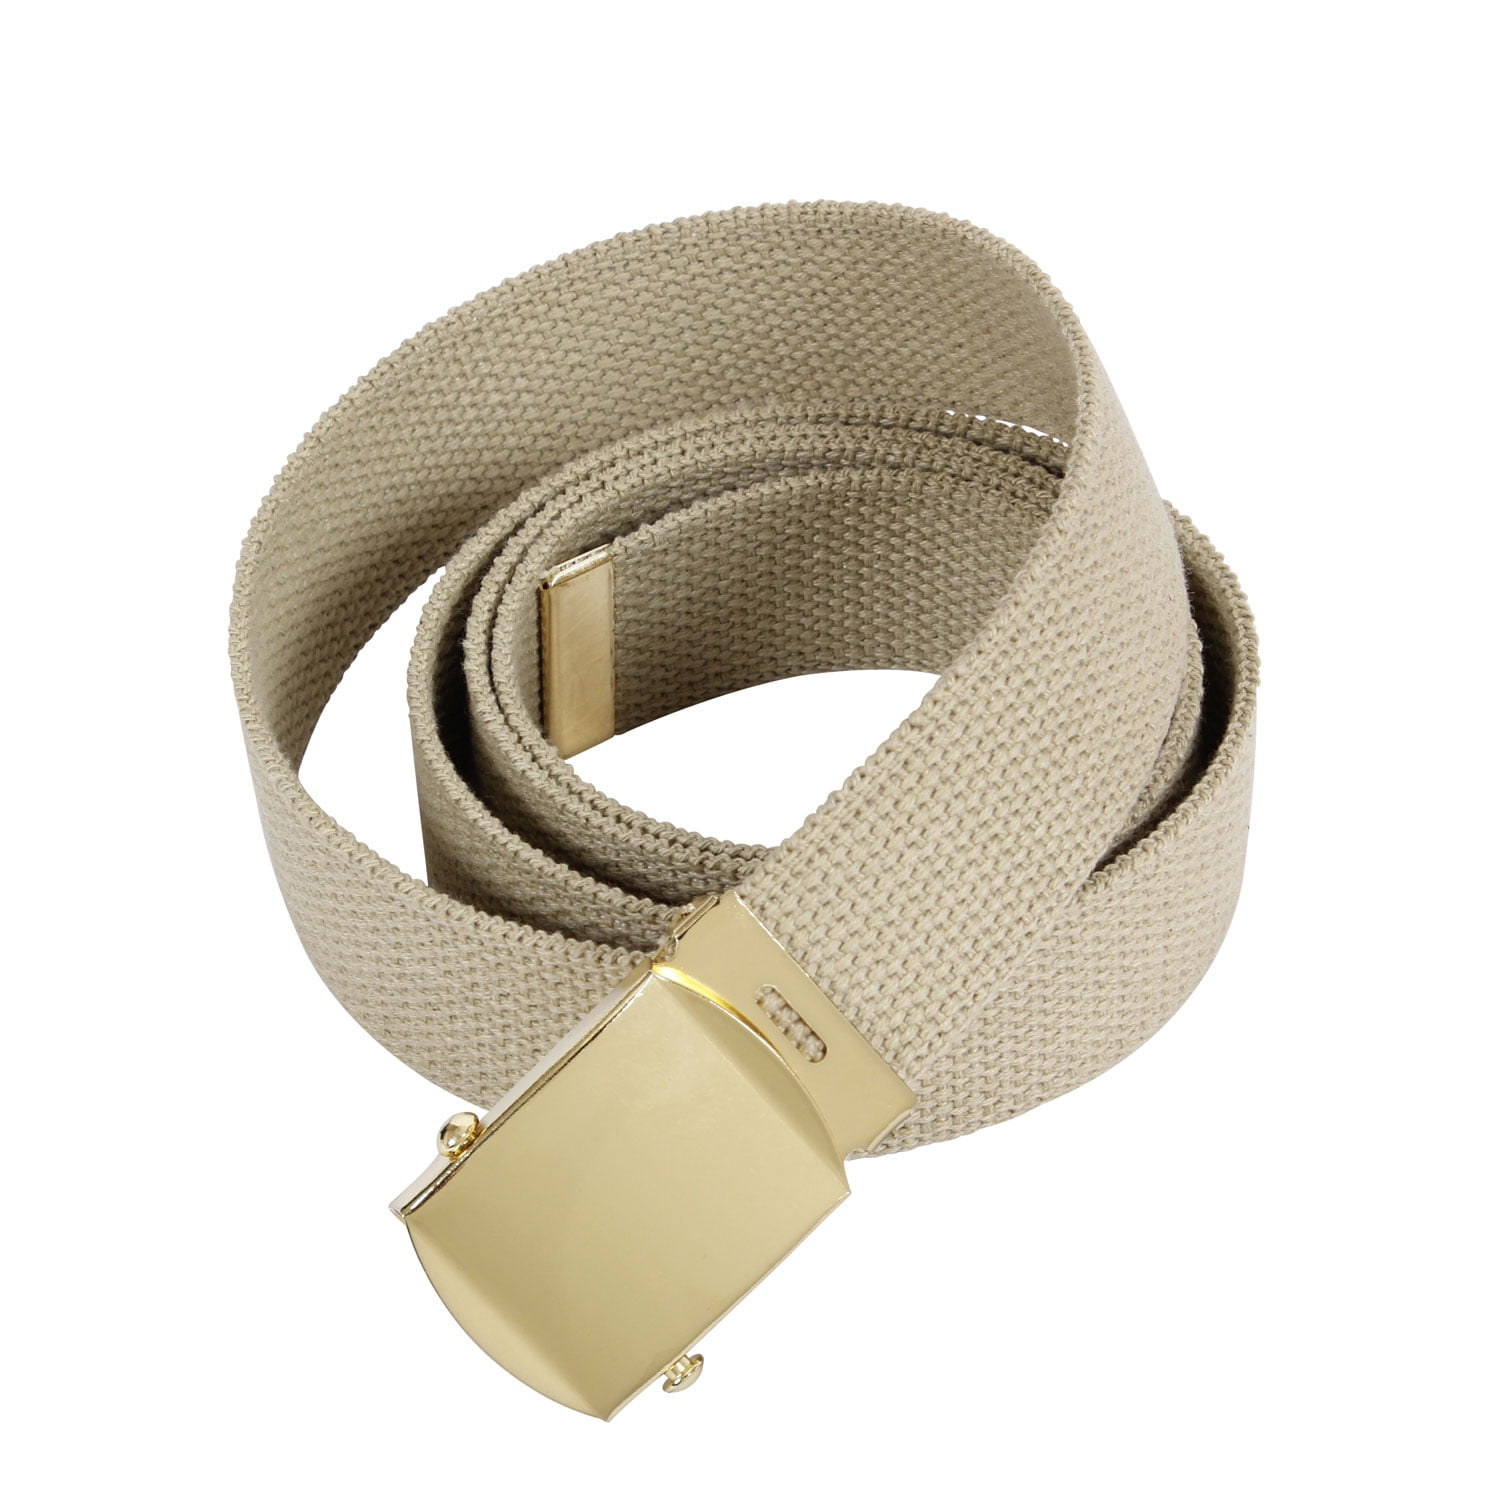 Rothco 44 Inch Web Belts - 4177 - Khaki w/ Gold Buckle 